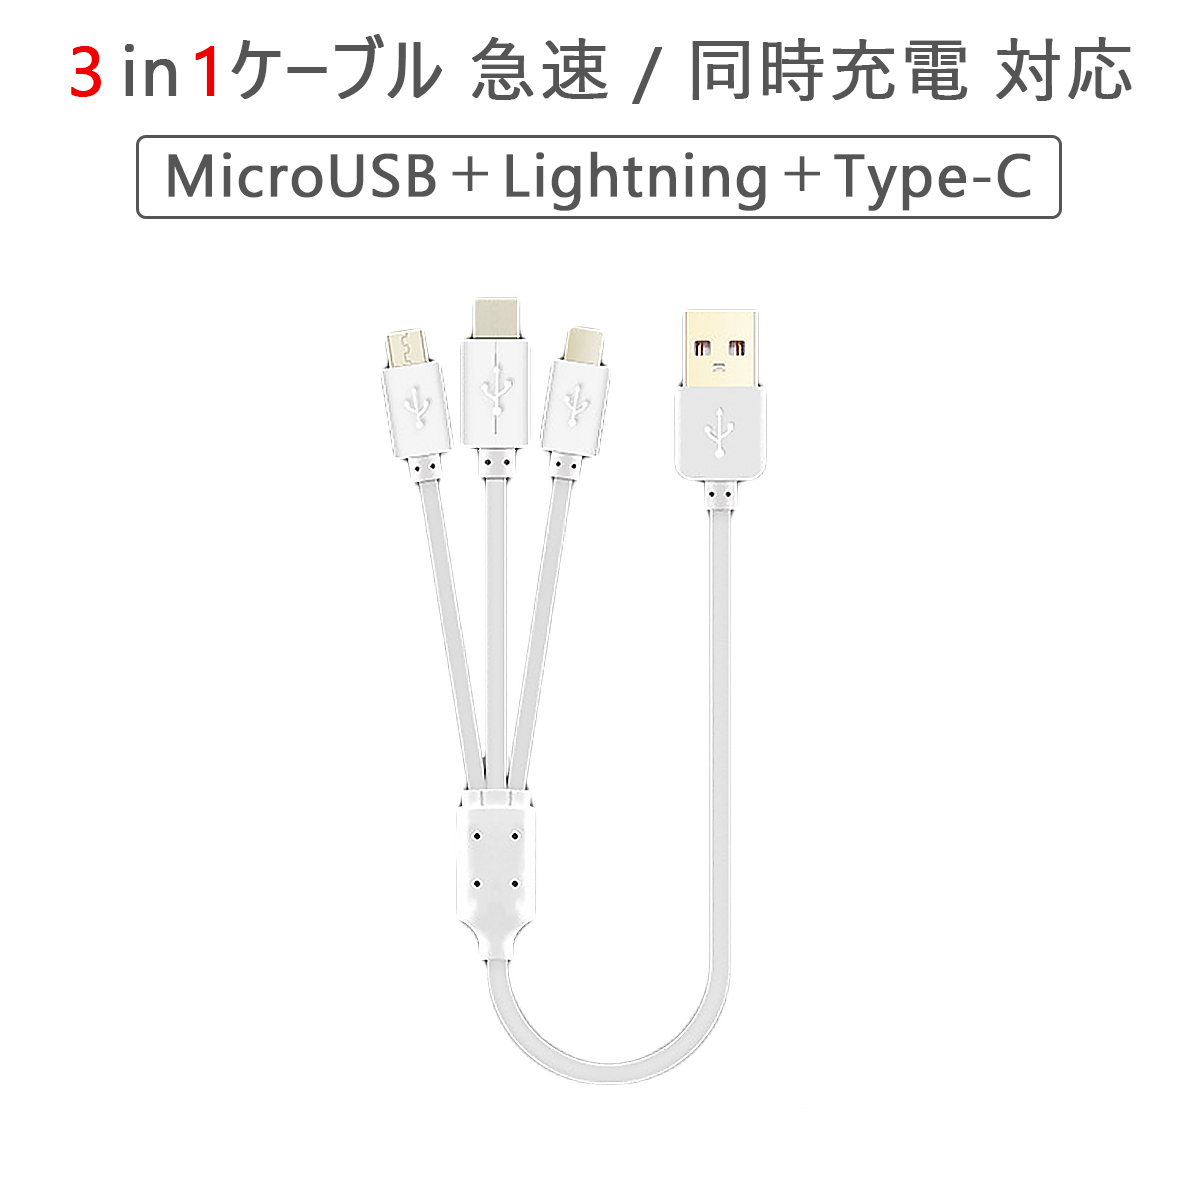 1mロングタイプ 3in1ケーブル Lightning Type-C MicroUSB ケーブル 急速充電 同時充電対応 iPhone iPad Macbook Android Xperia Galaxy SDM便送料無料 1ヶ月保証